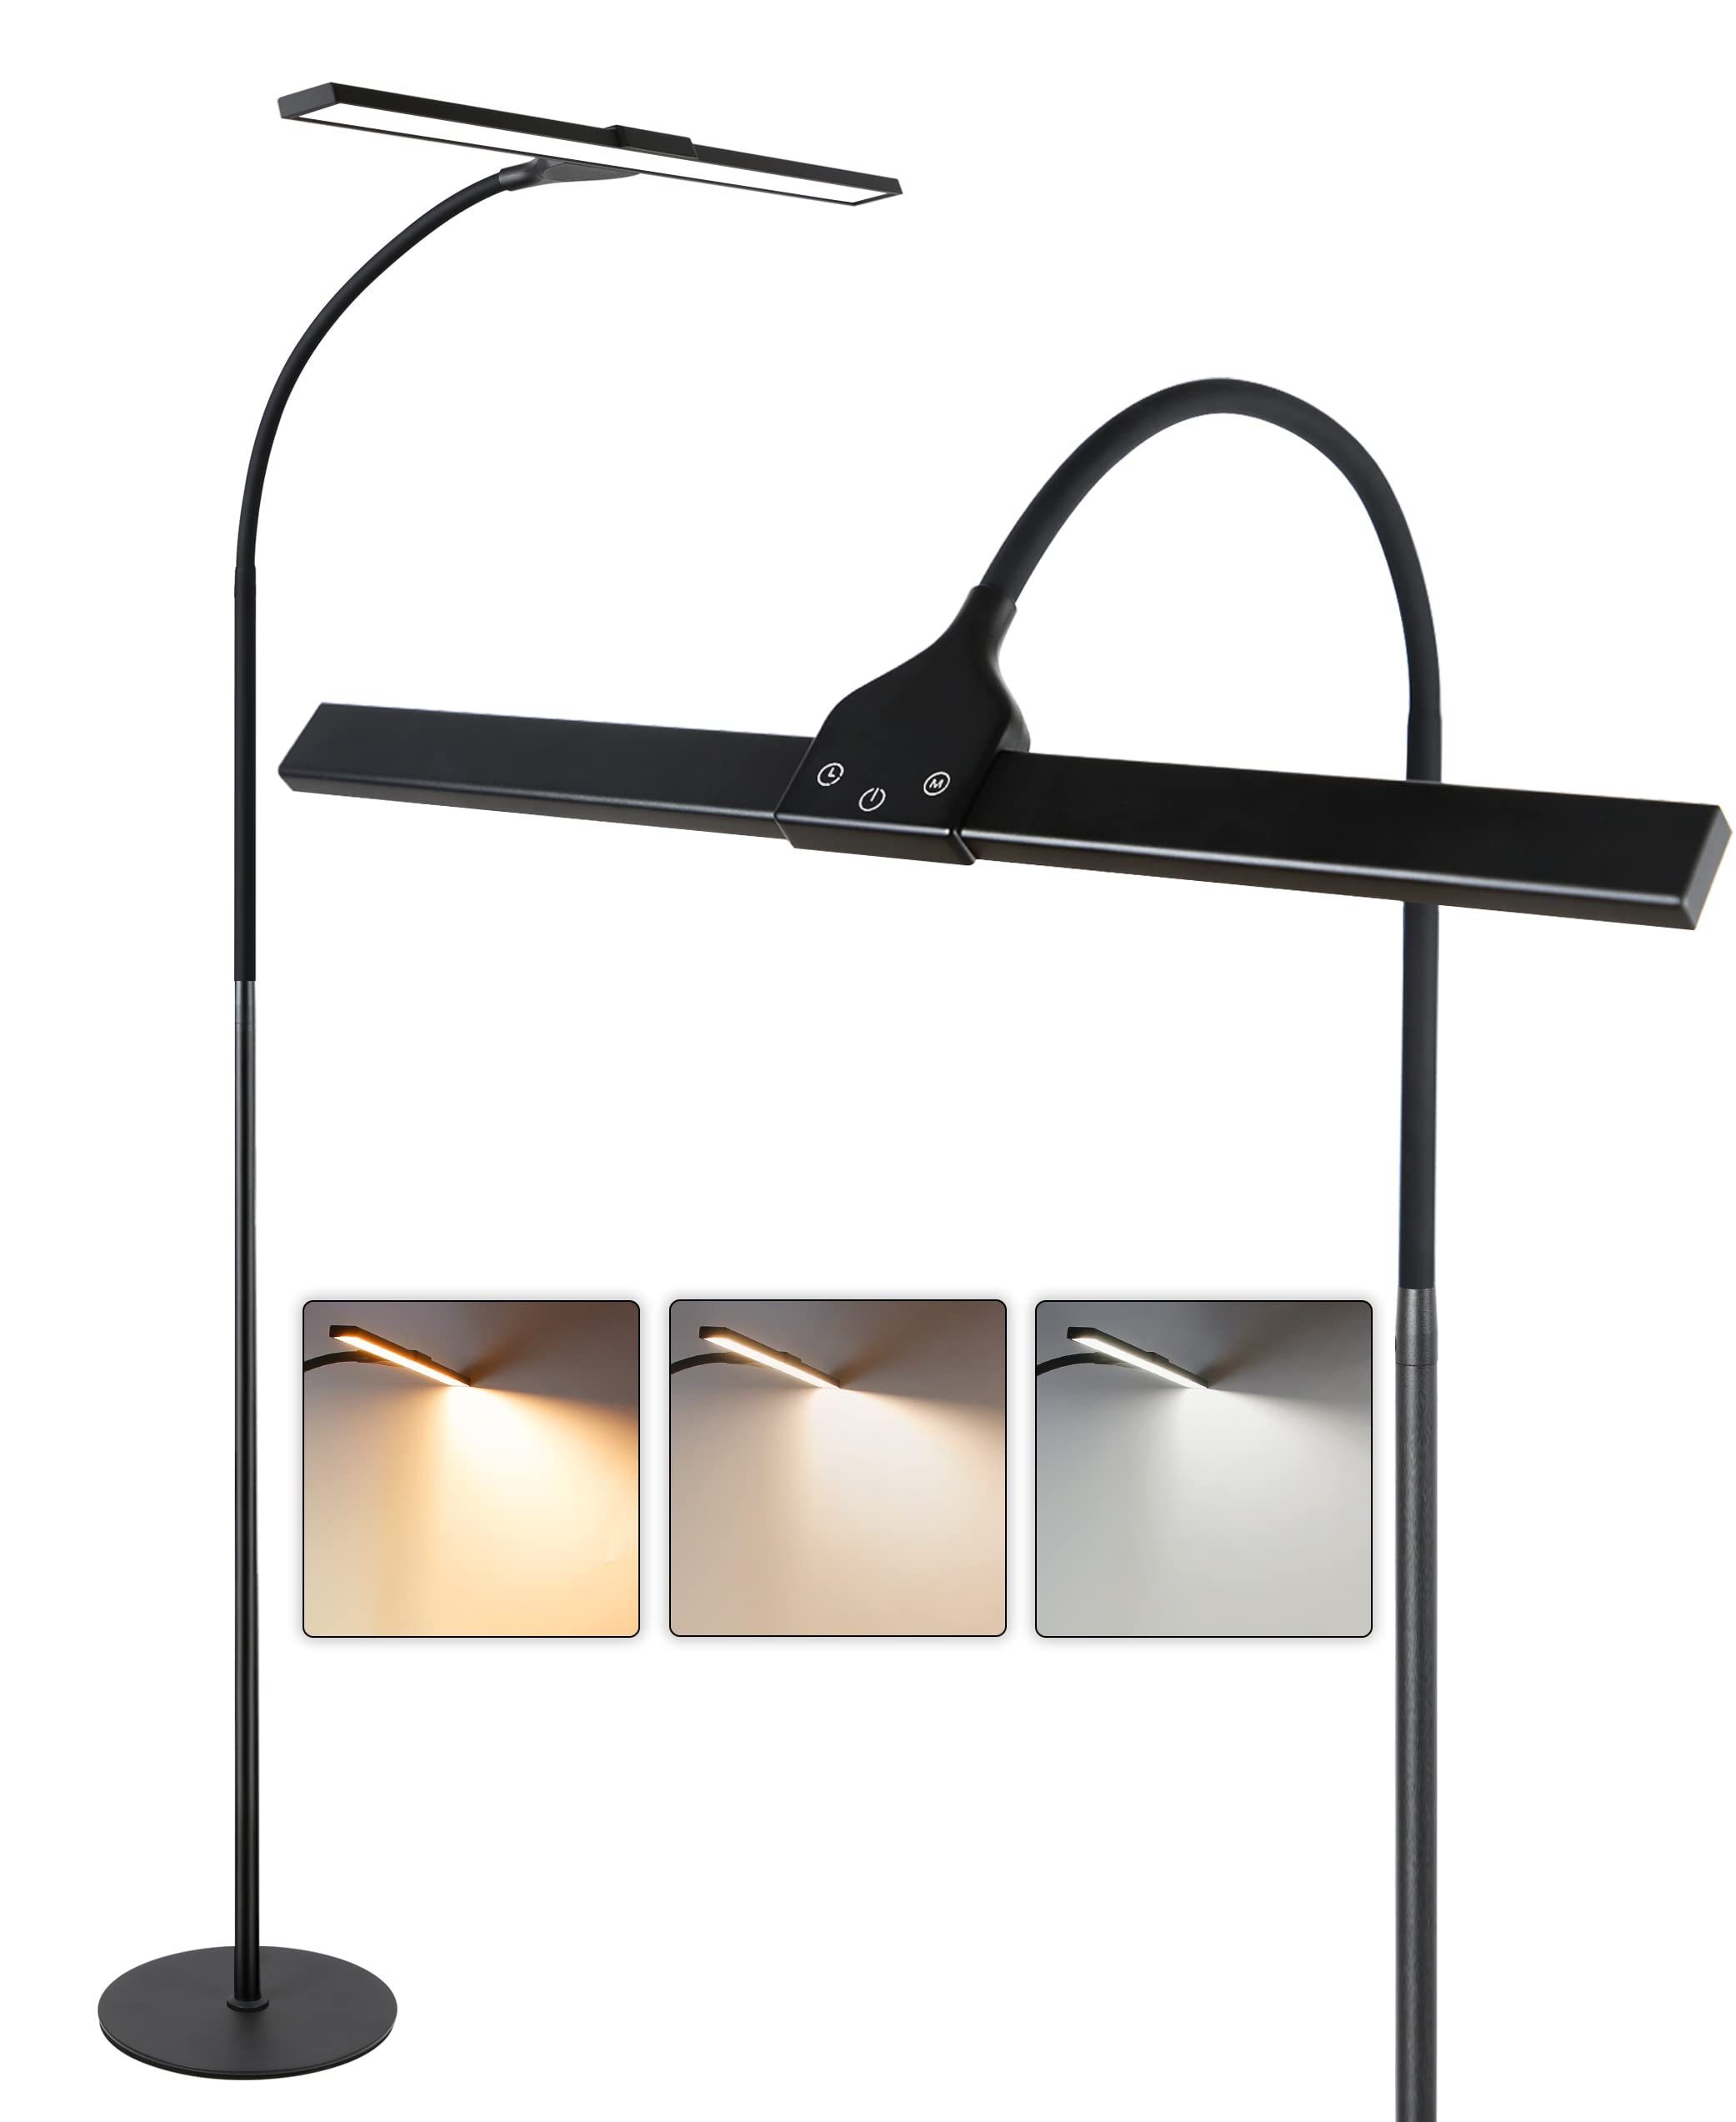 Leselampe schwarz dimmbar, Deko Modern LED Touch fest Stehlampe Beleuchtung integriert, LED Timer mit Büro, ZMH